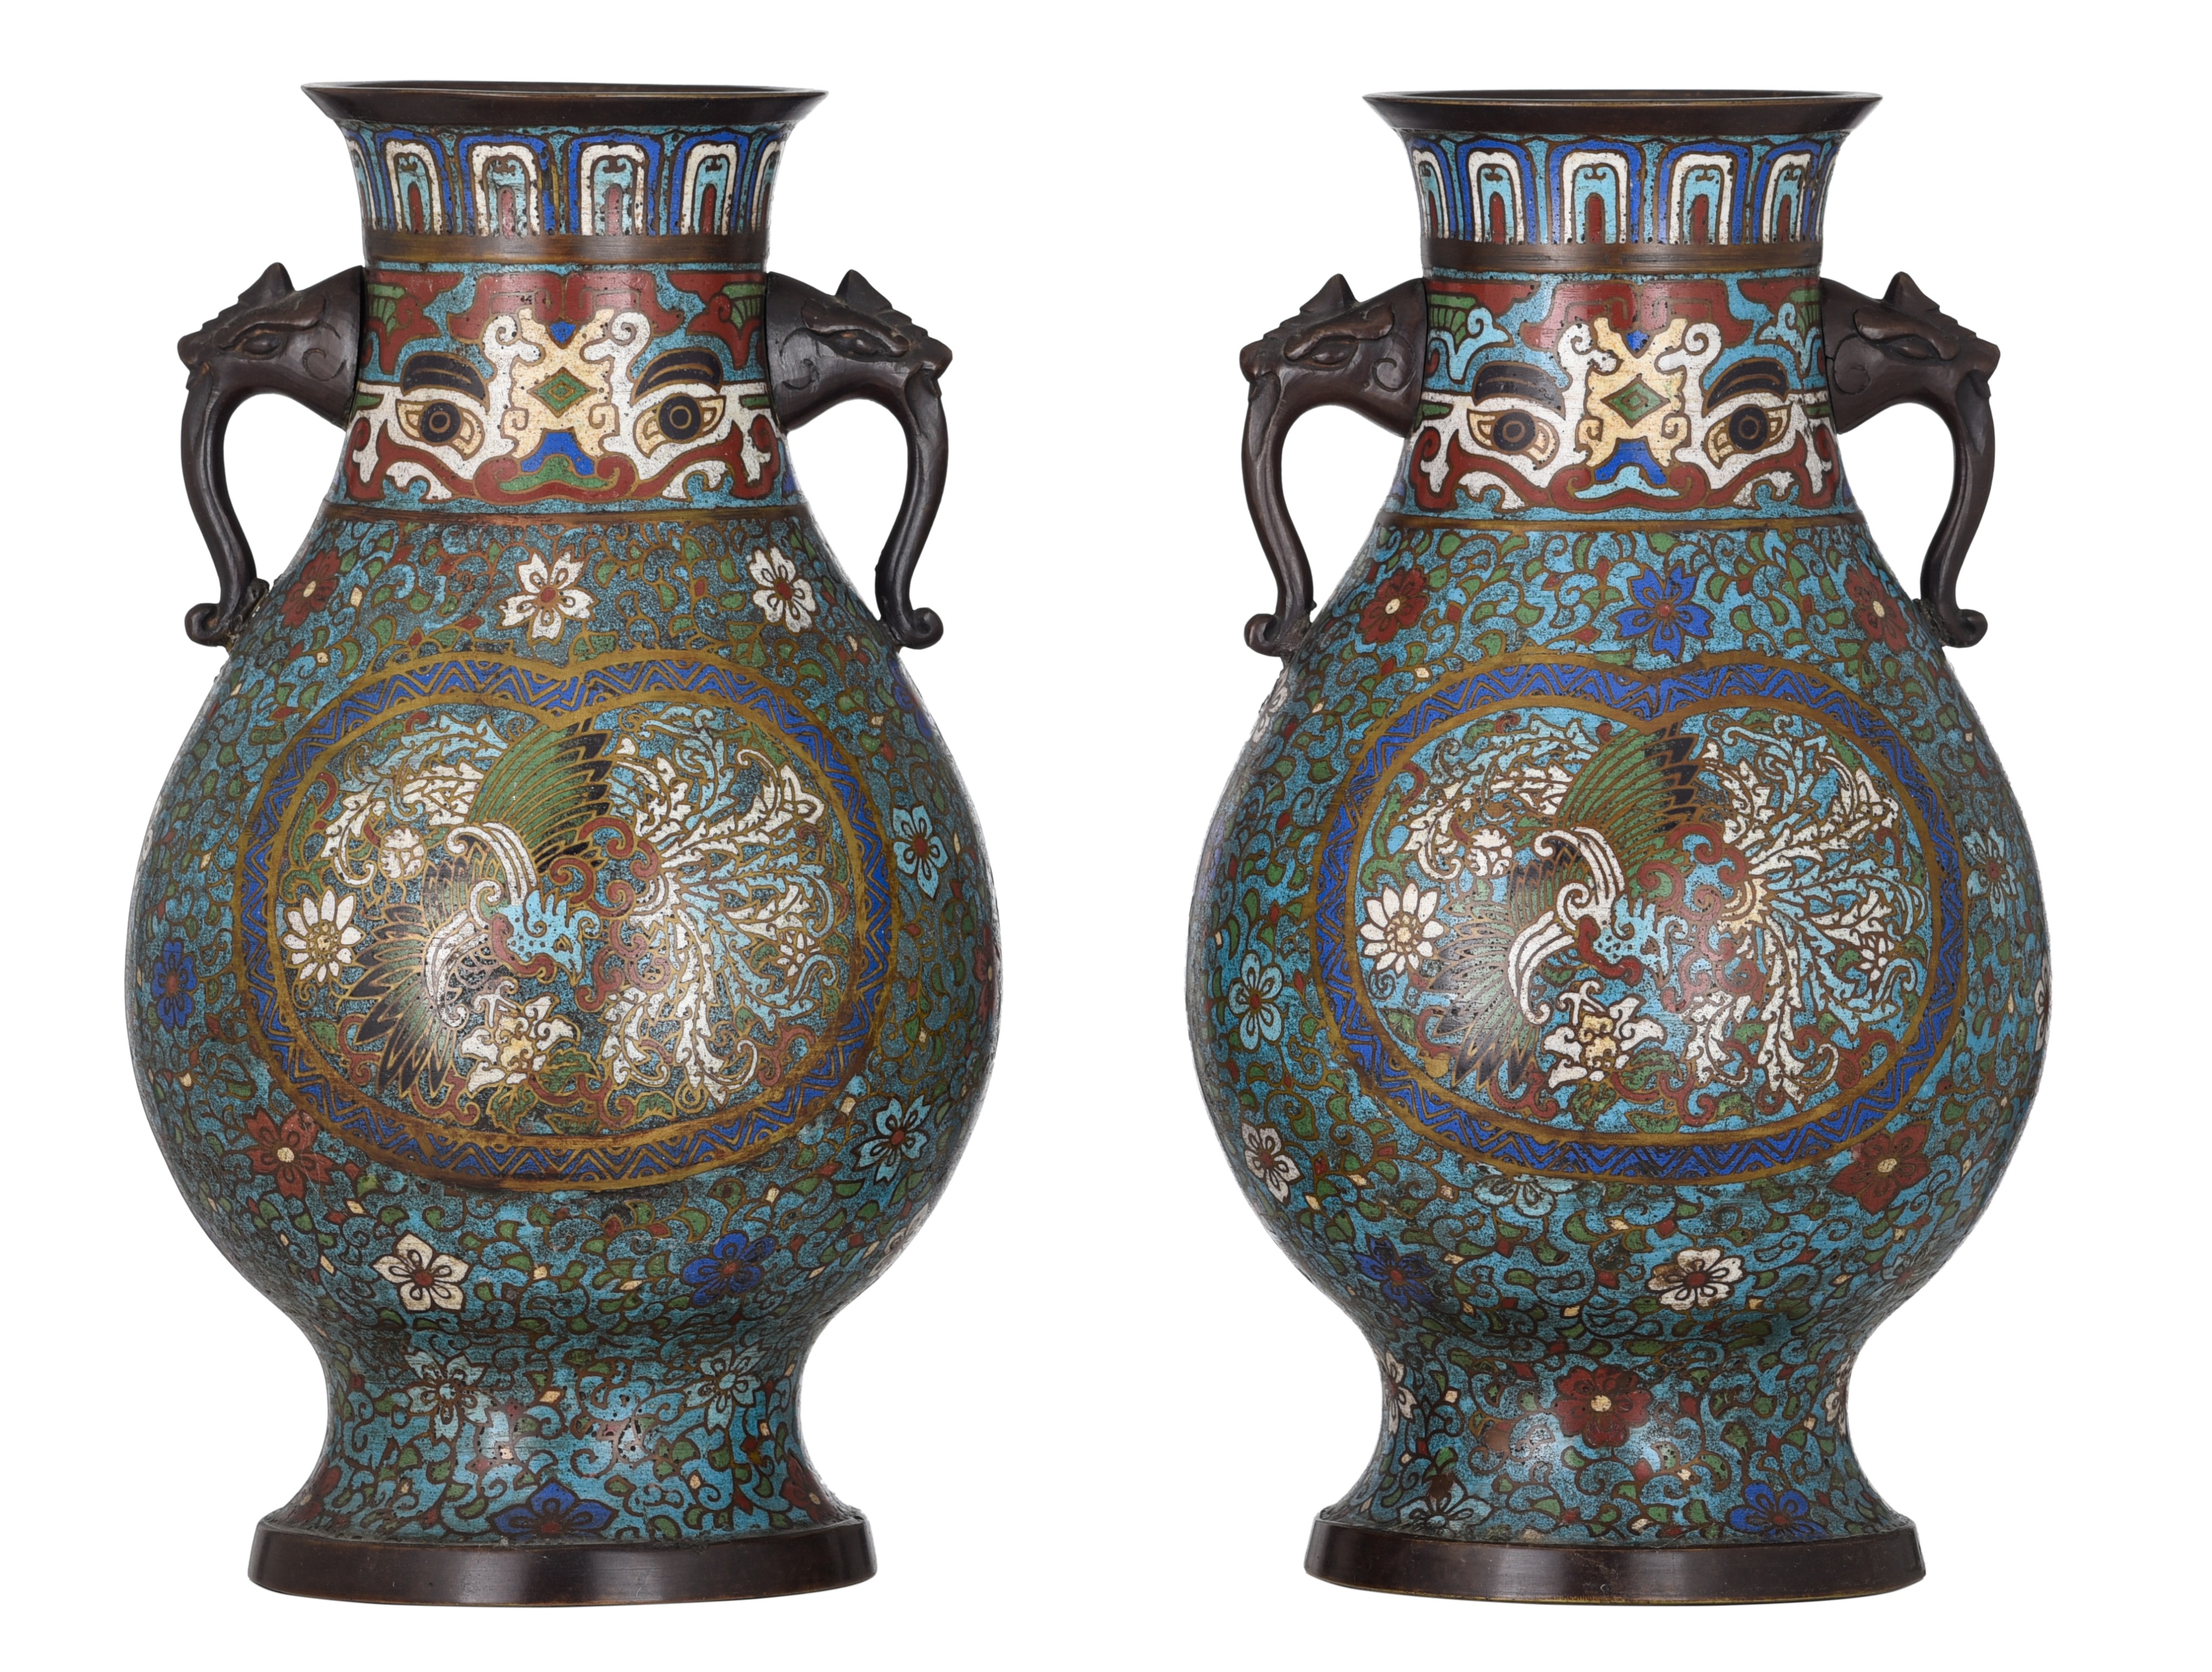 A pair of Japanese champleve bronze vases, 19thC/20thC, H 36 cm